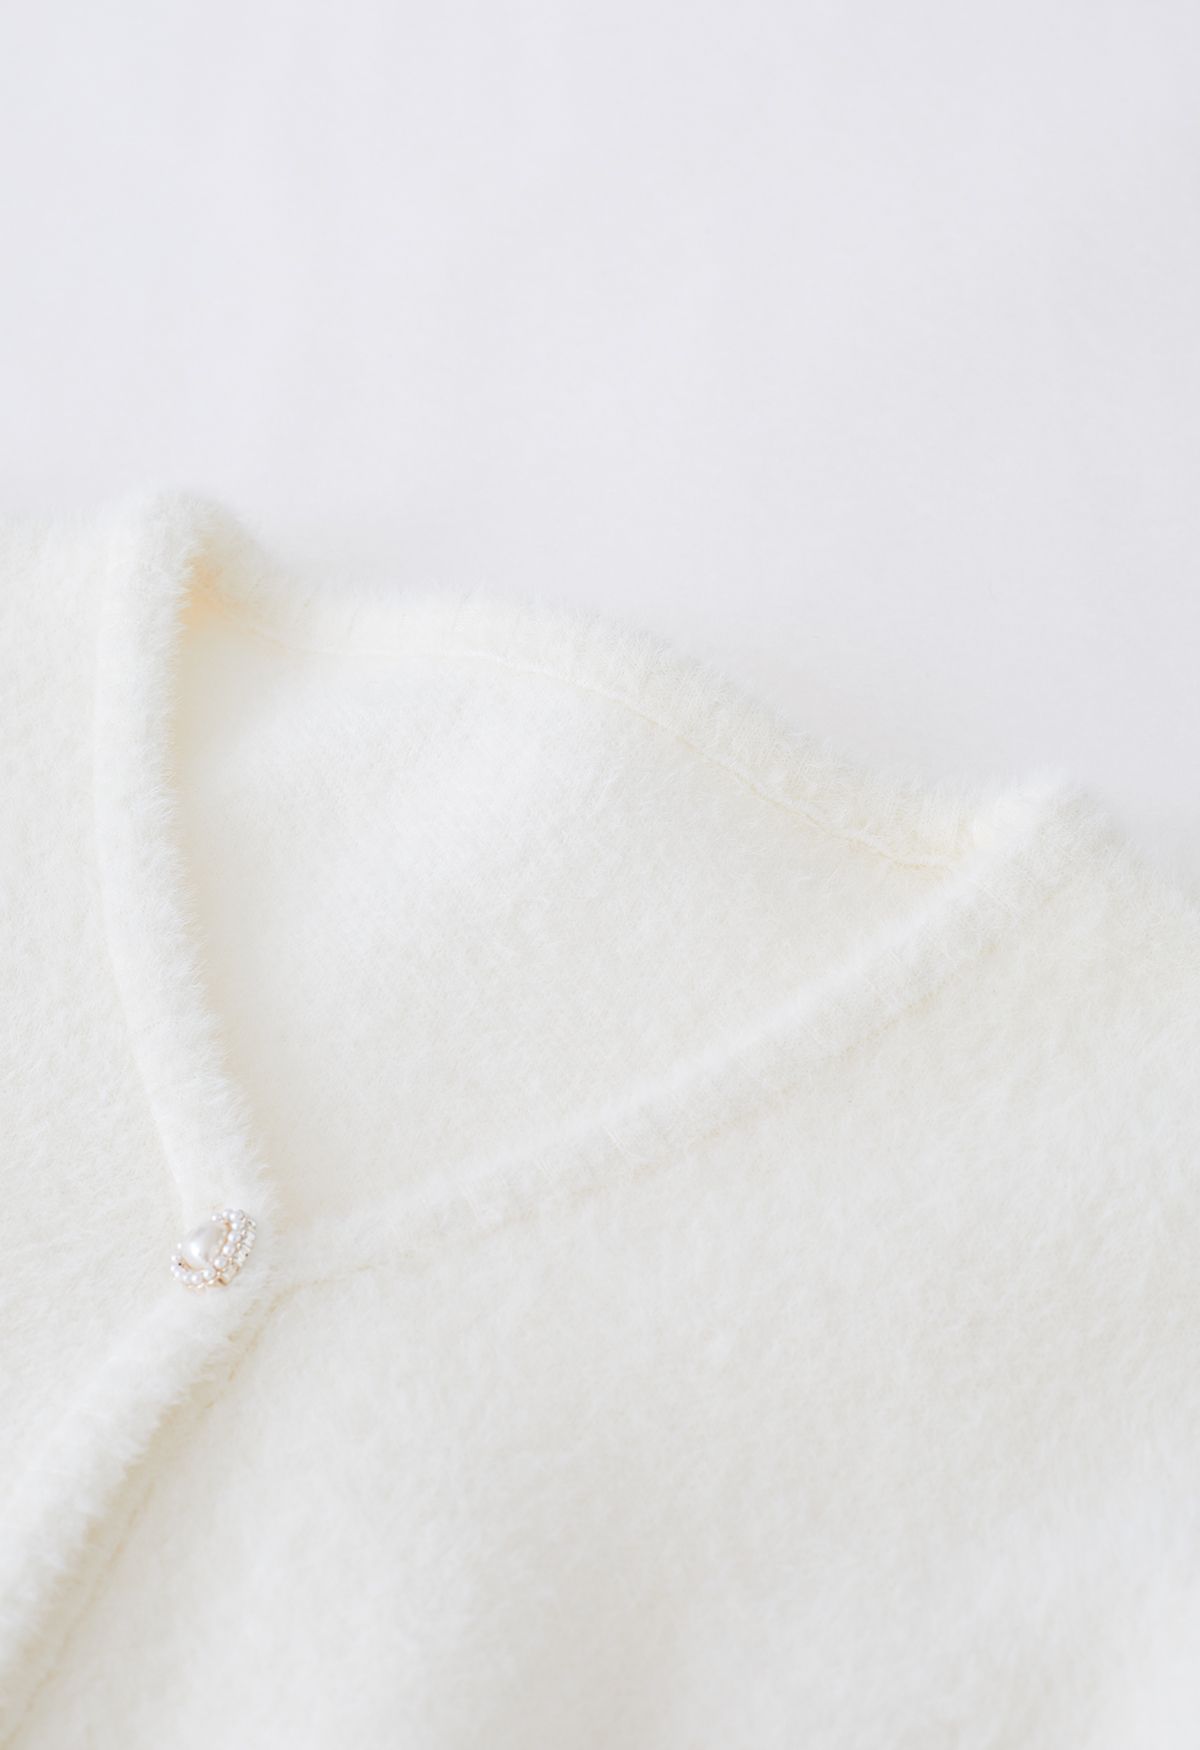 Heart-Shape Button Fuzzy Crop Cardigan in White